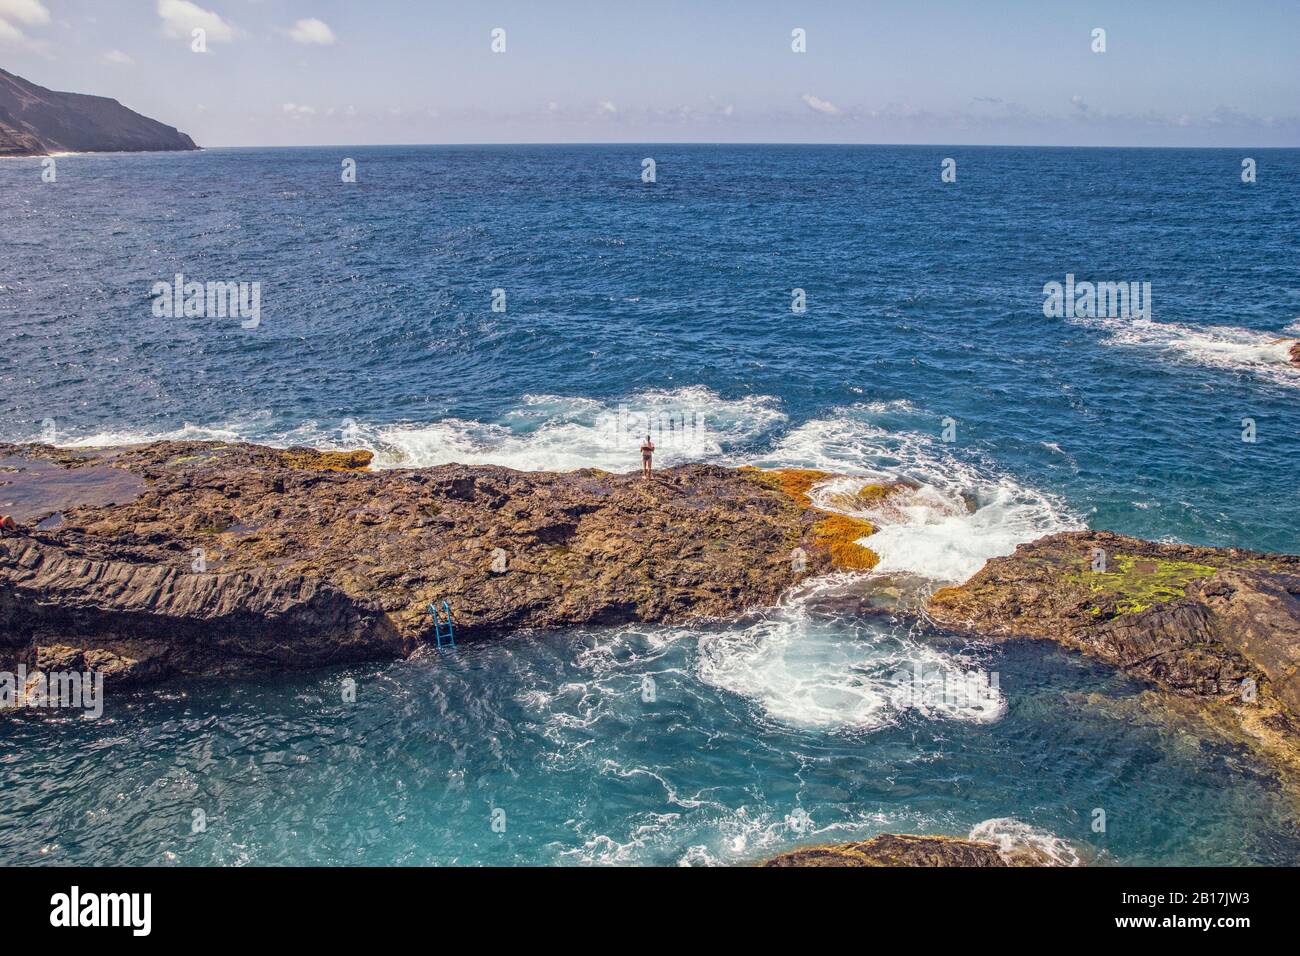 Spain, La Gomera, Hermigua, Man standing on cliff by sea water pool Stock Photo